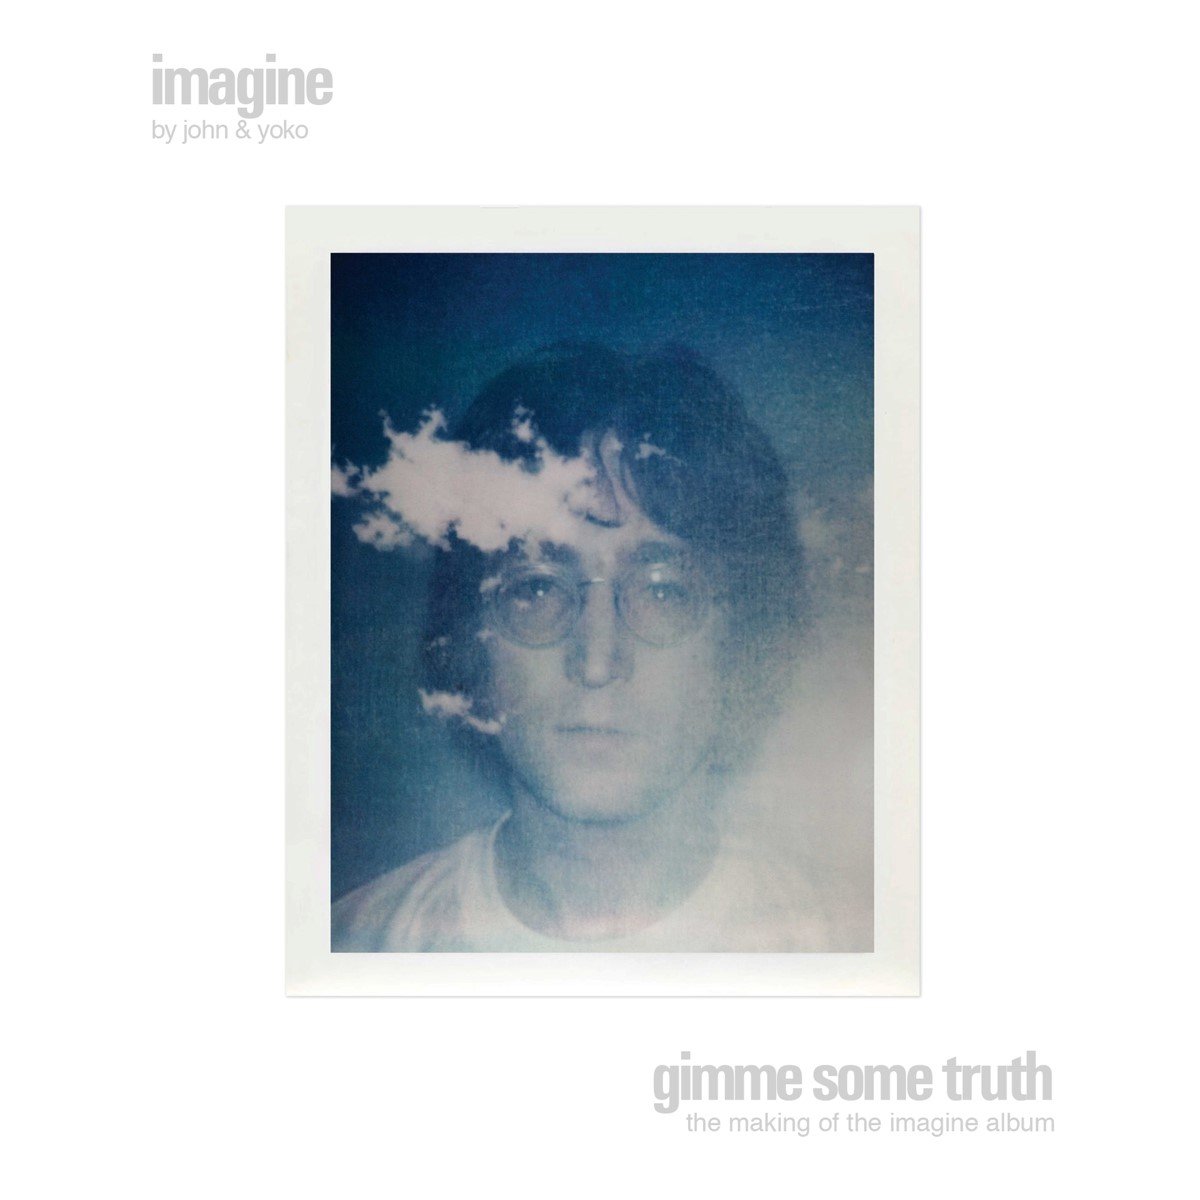 John Lennon & Yoko Ono - Imagine & Gimme Some Truth (Blu-ray) (Remastered 2010-2018)